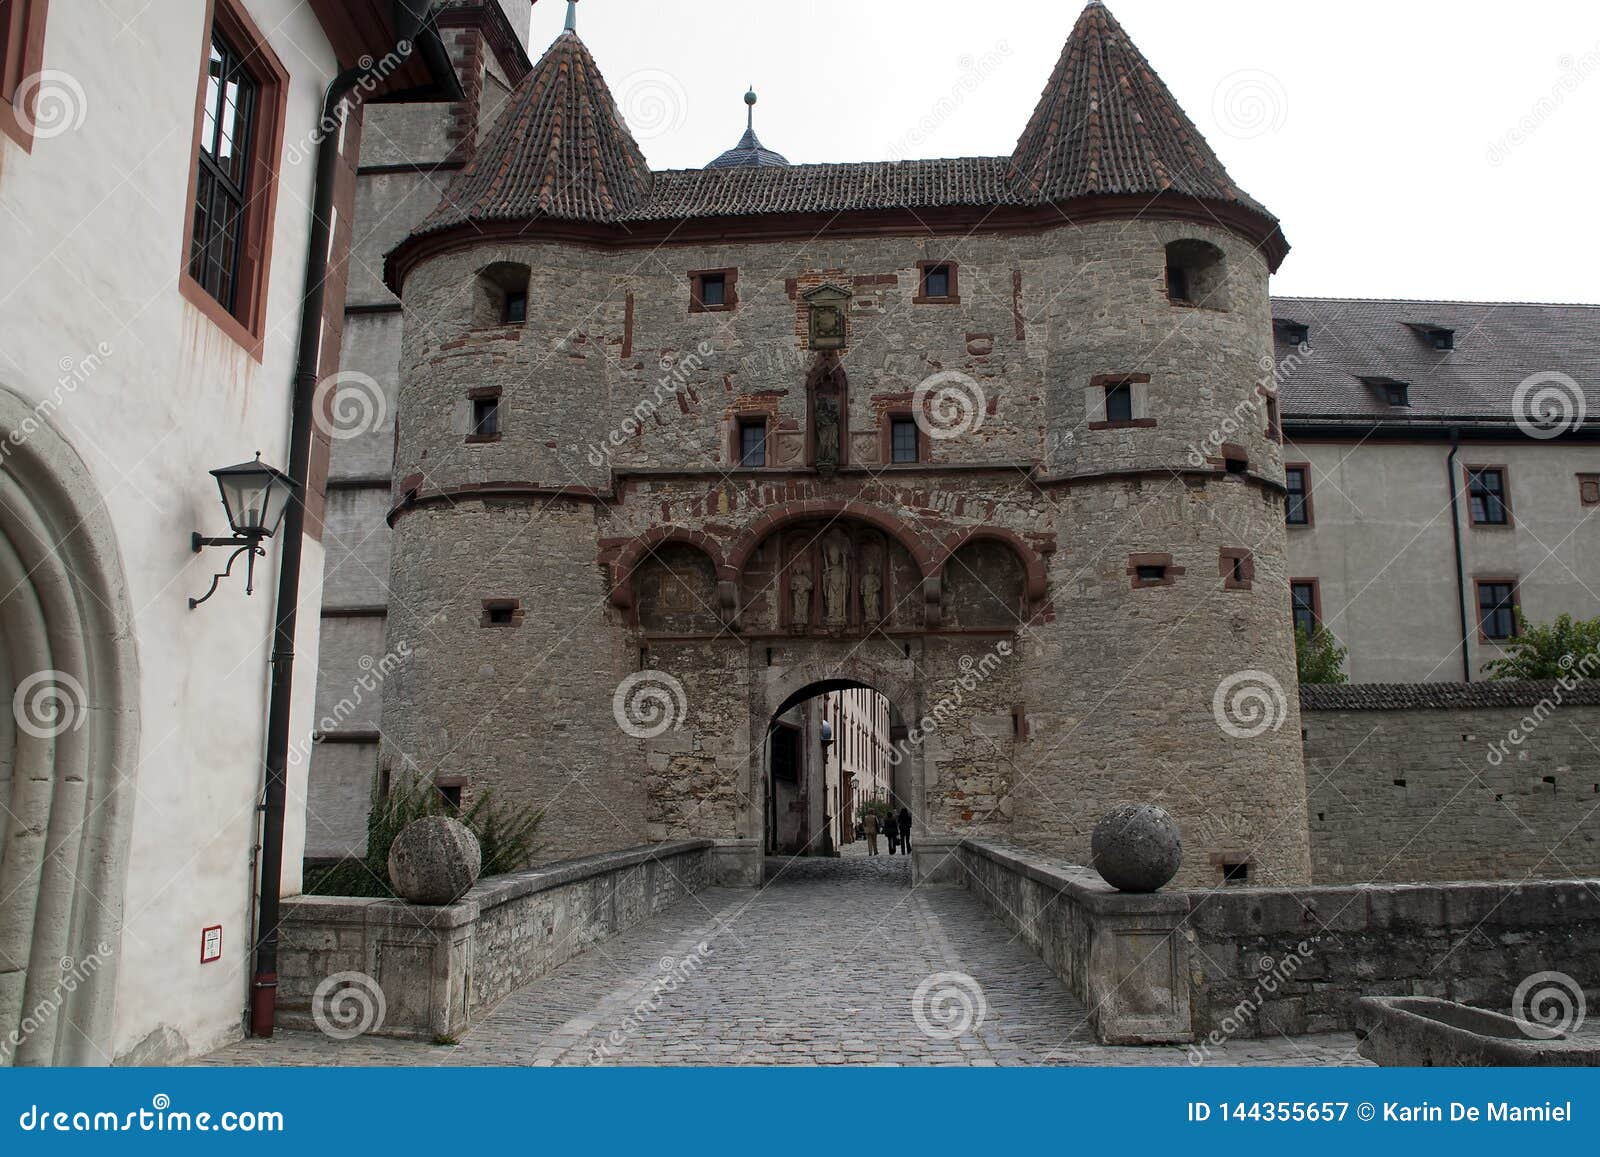 fortress marienberg entrance gate